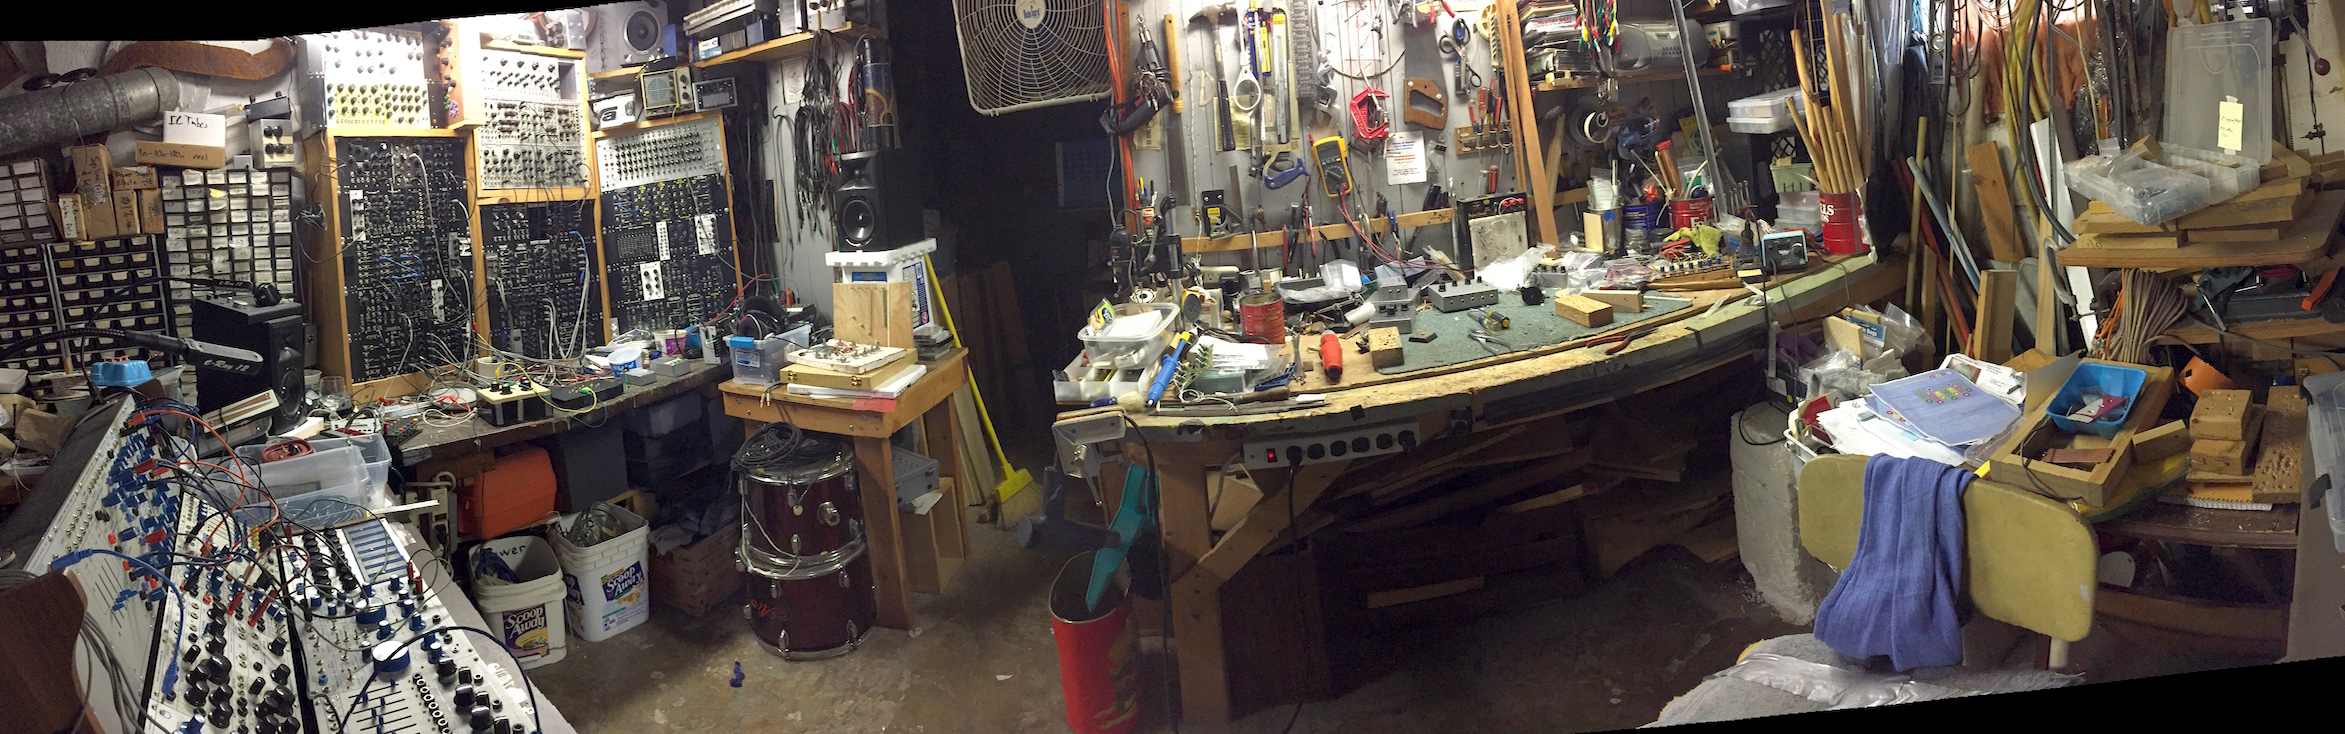 Fluxmonkey's basement workshop, panorama view